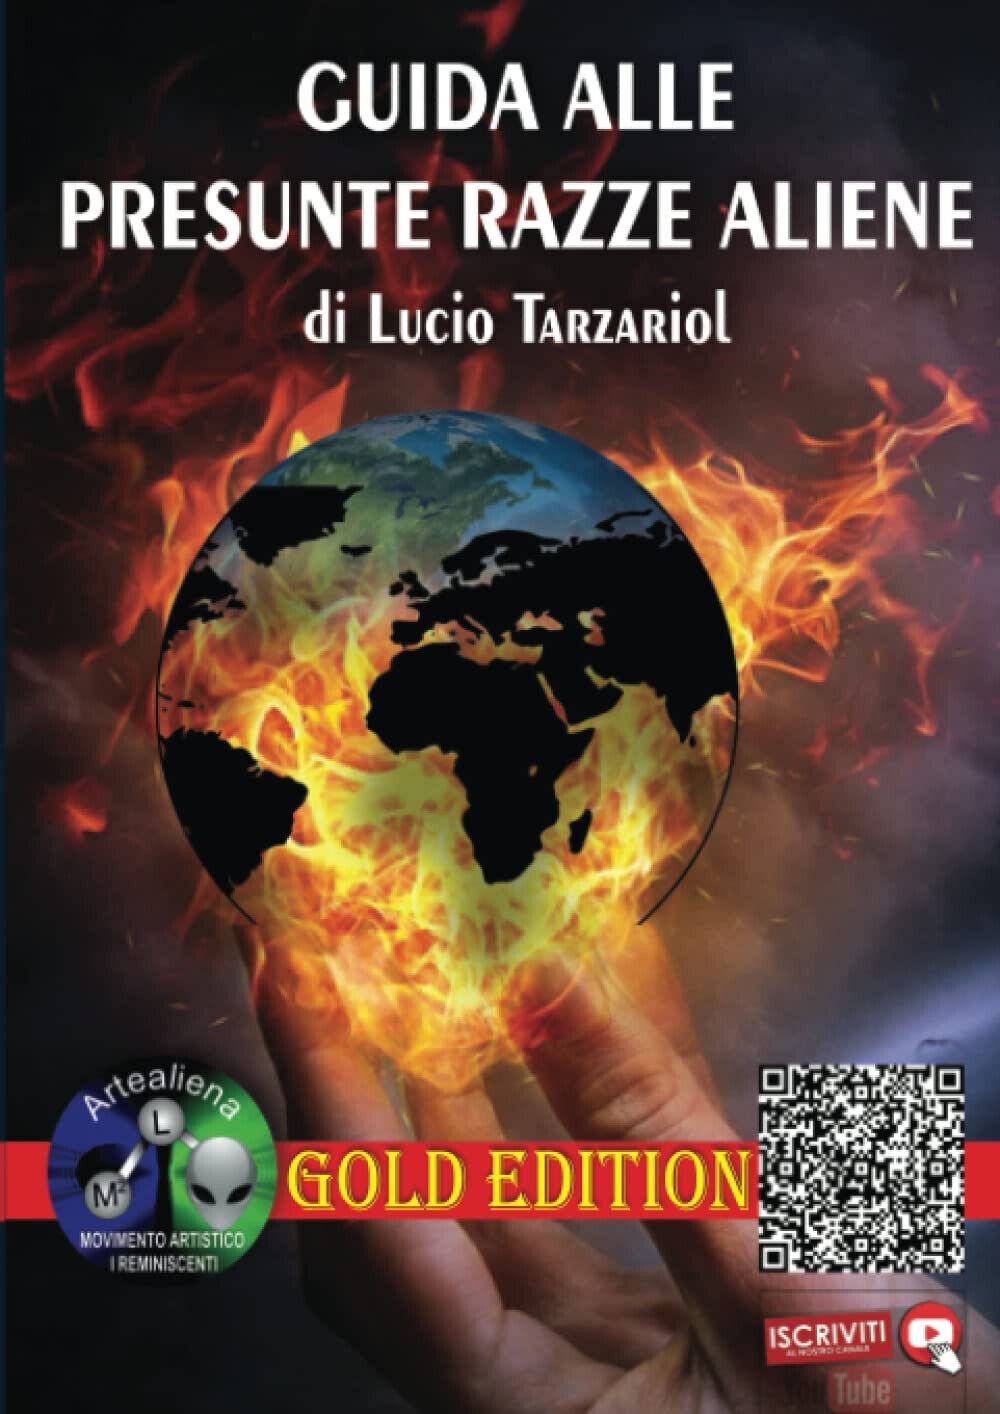 Guida alle presunte razze aliene - Lucio Tarzariol - StreetLib, 2022